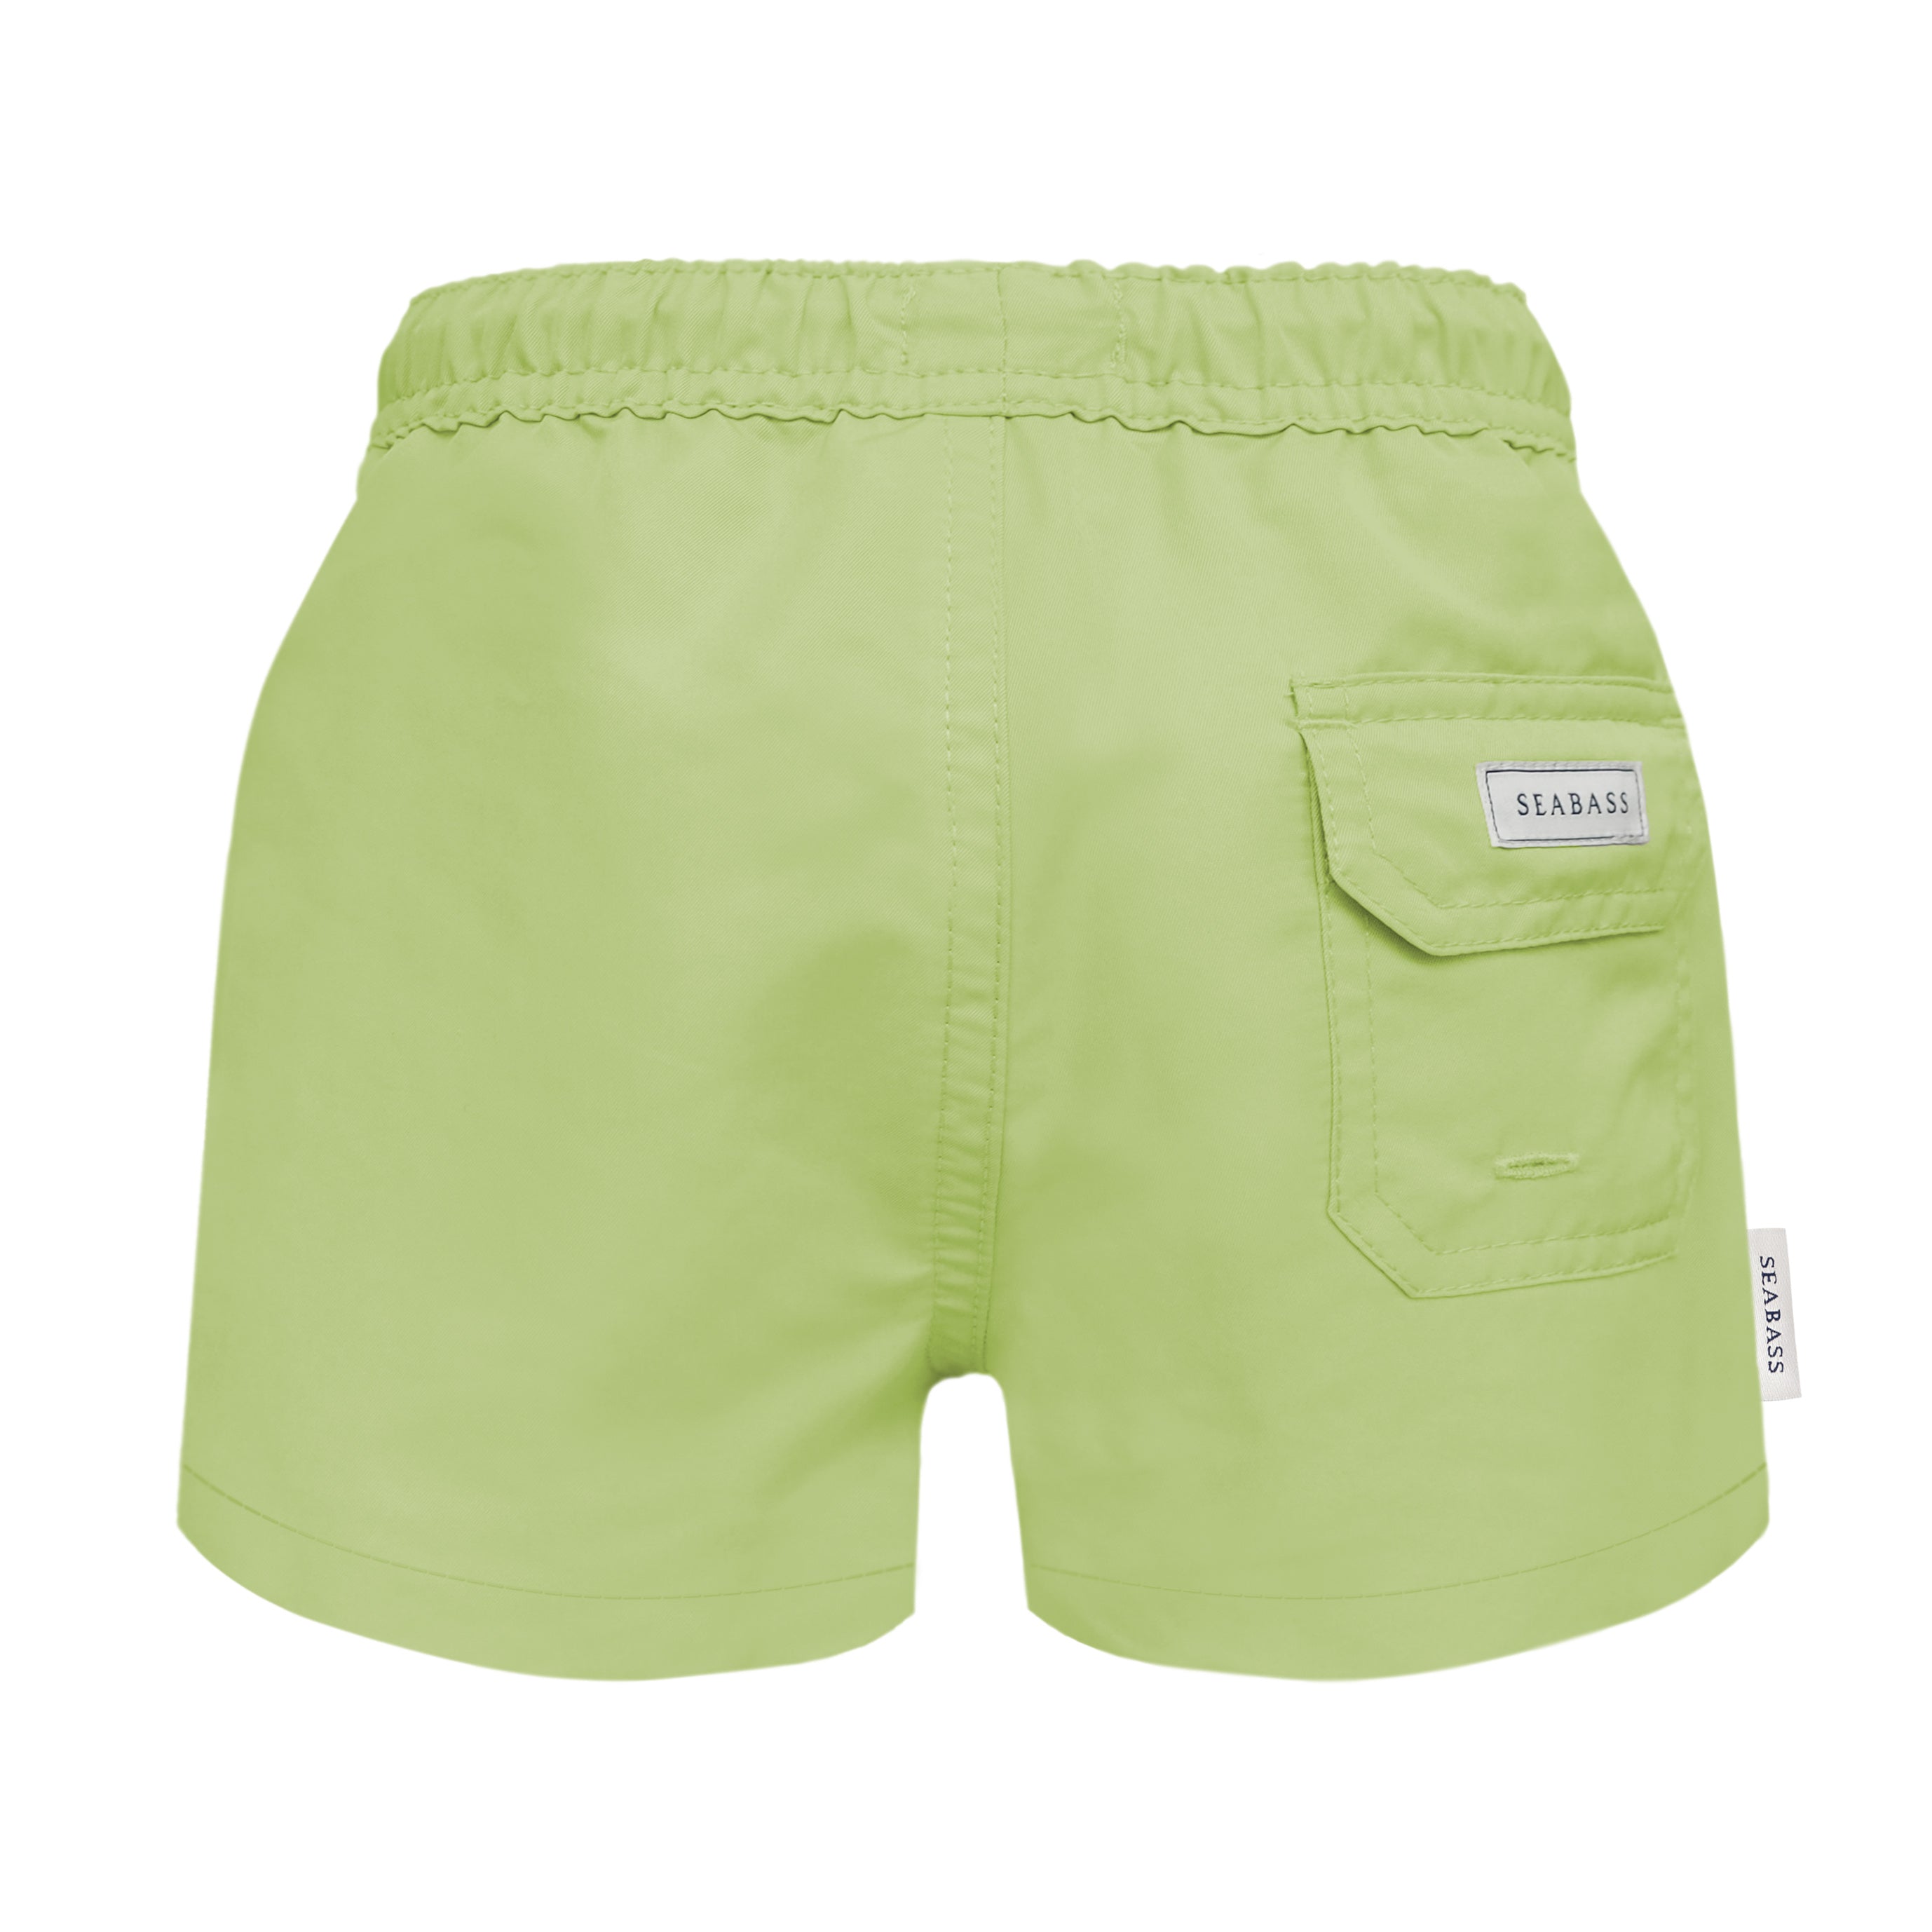 Männer UV Badeshort Pistazie Grün - einfarbig